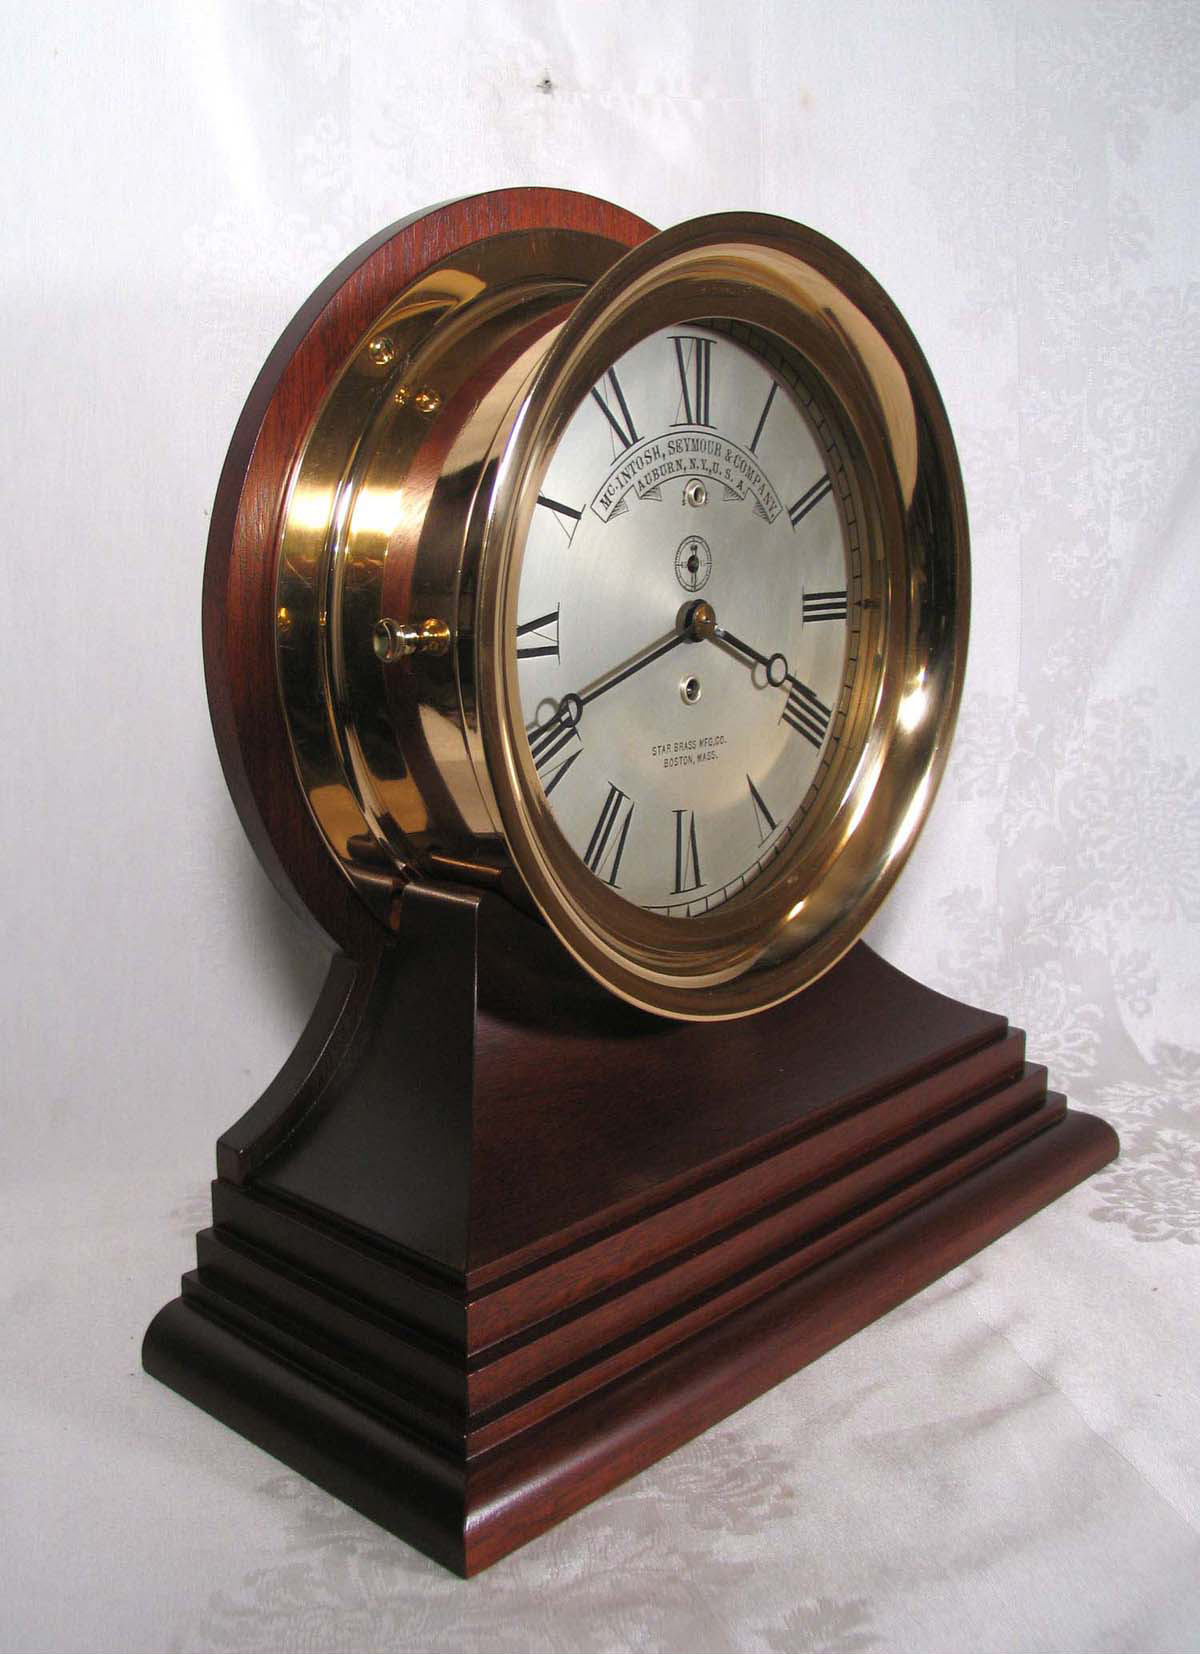 E. Howard 10 inch Marine Clock - McIntosh, Seymour & Company